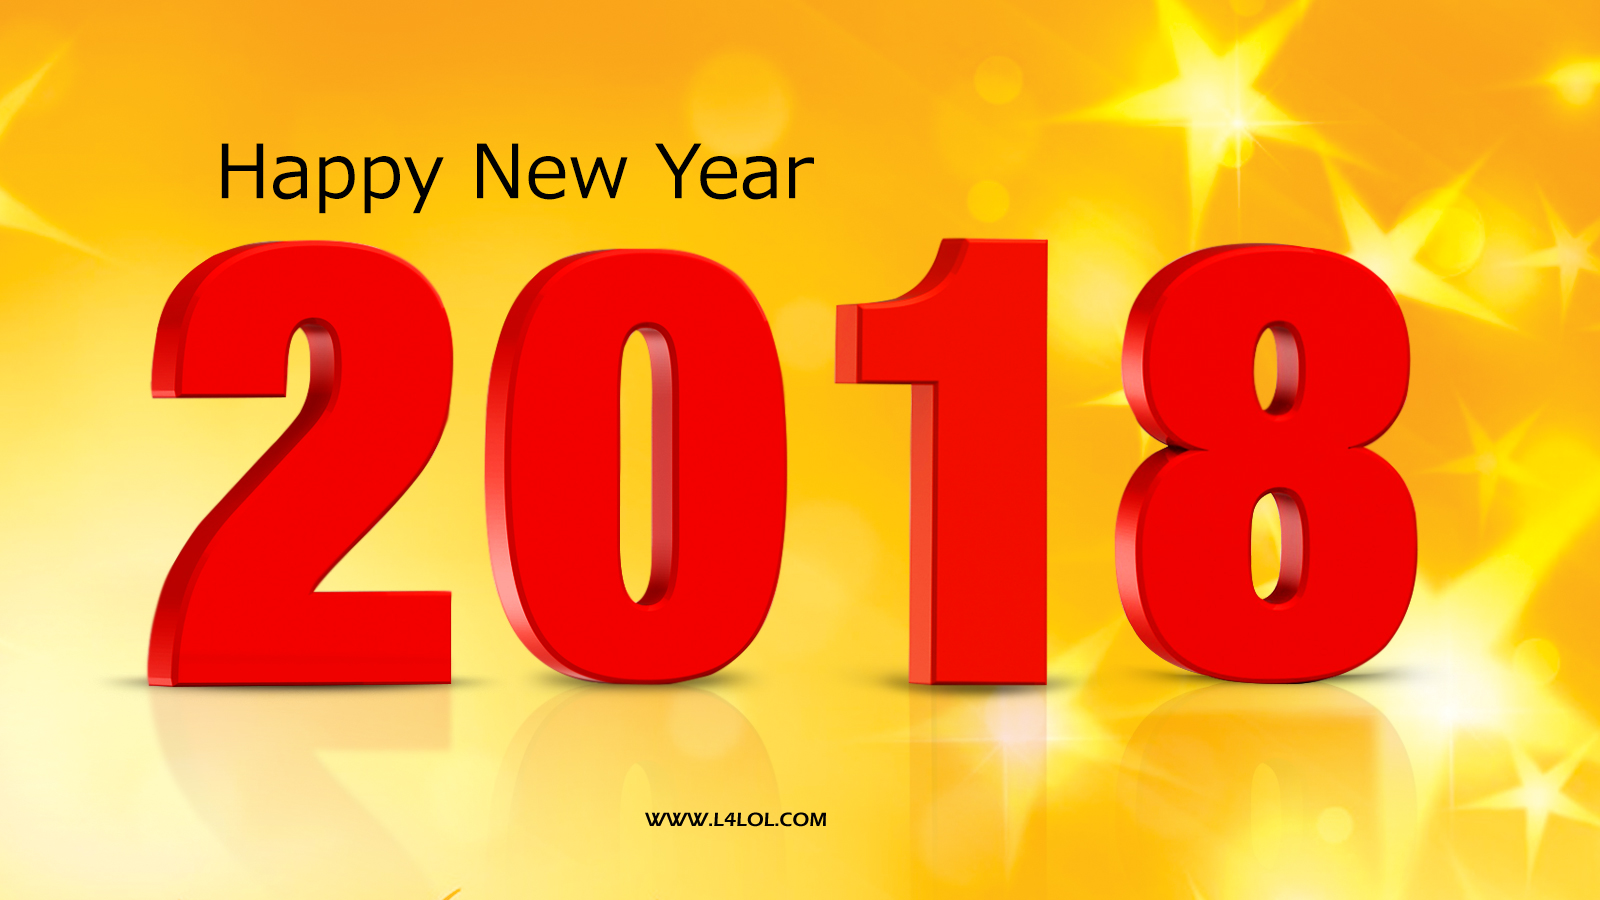 happy new year 2018 image